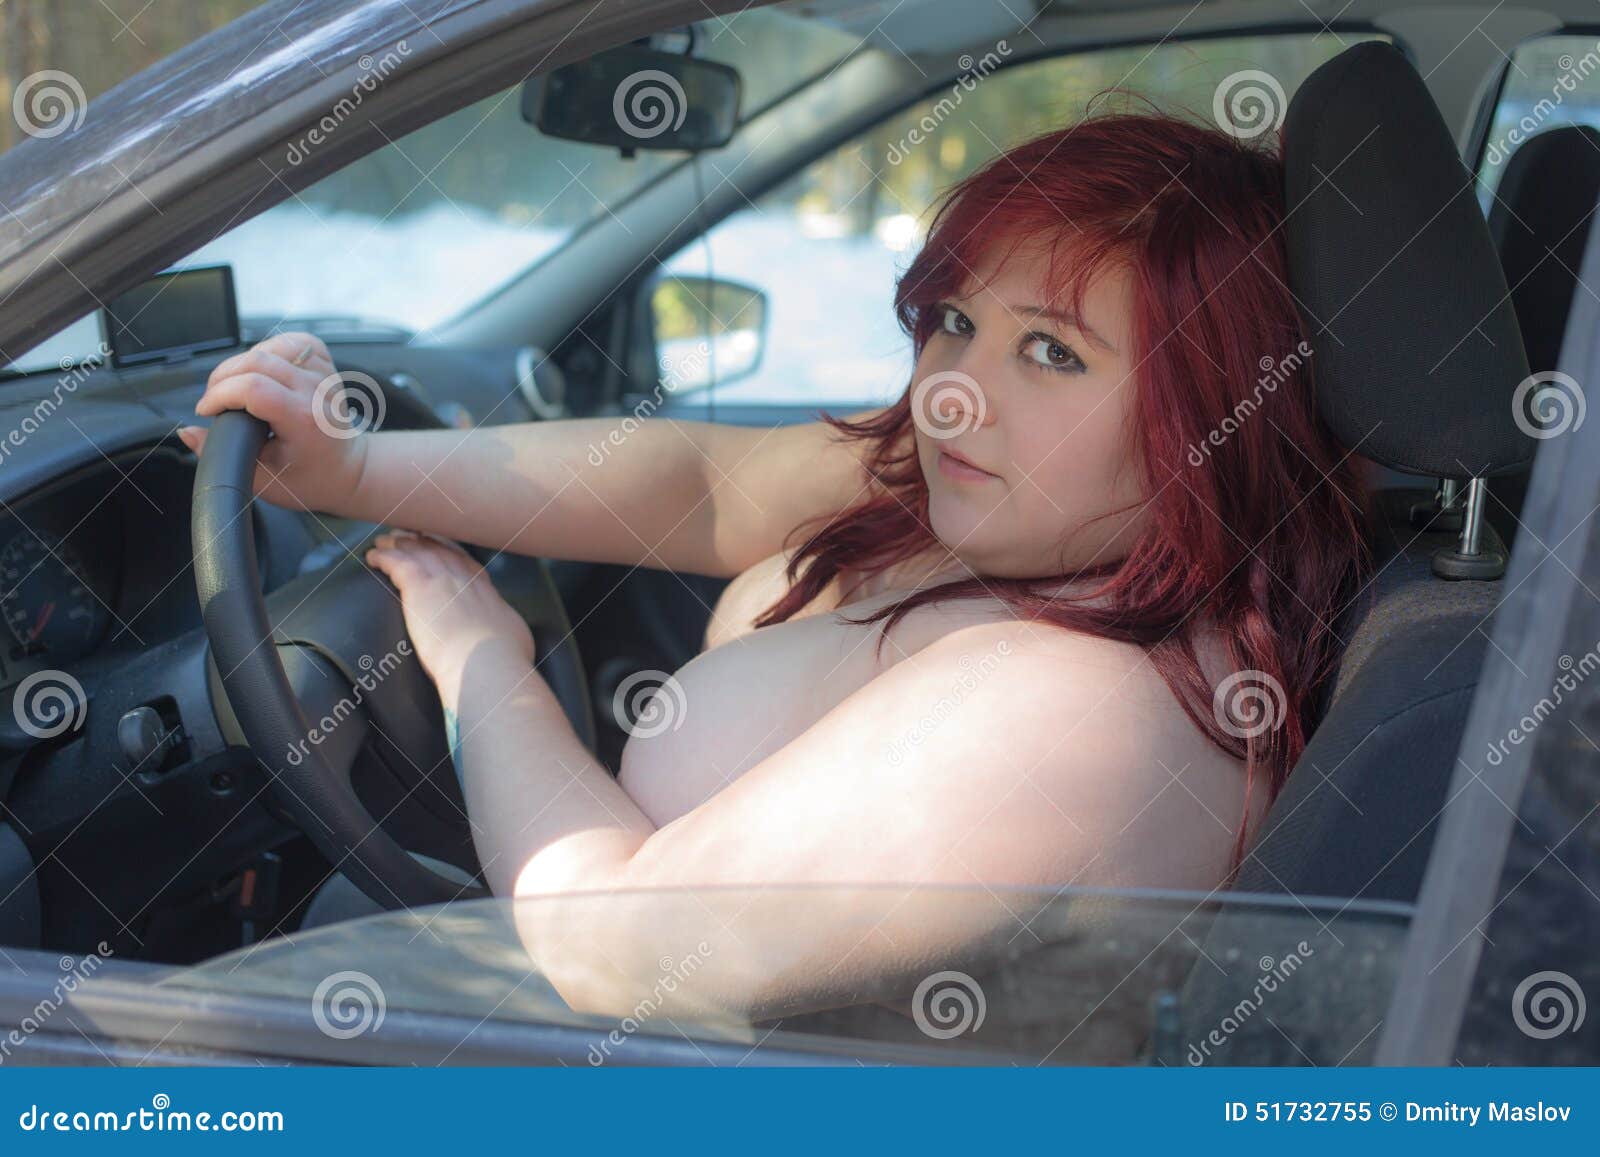 Naked Women Drivers 110